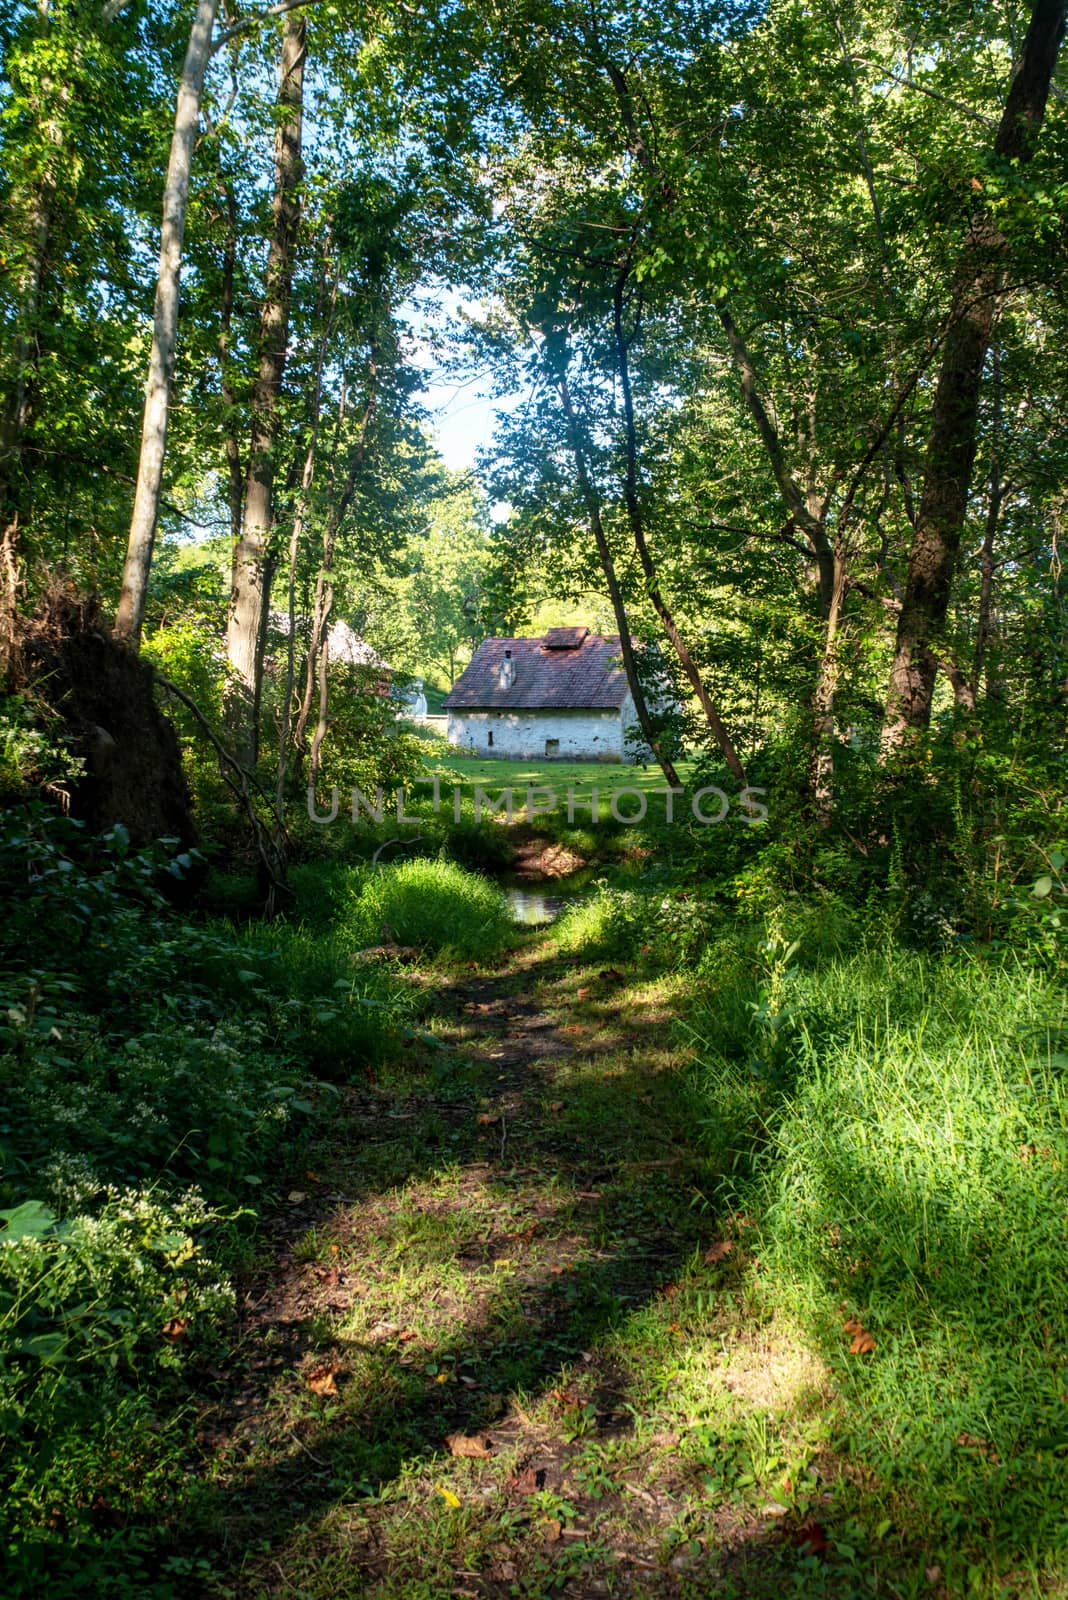 Idyllic forest path leads to quaint stone cabin by marysalen